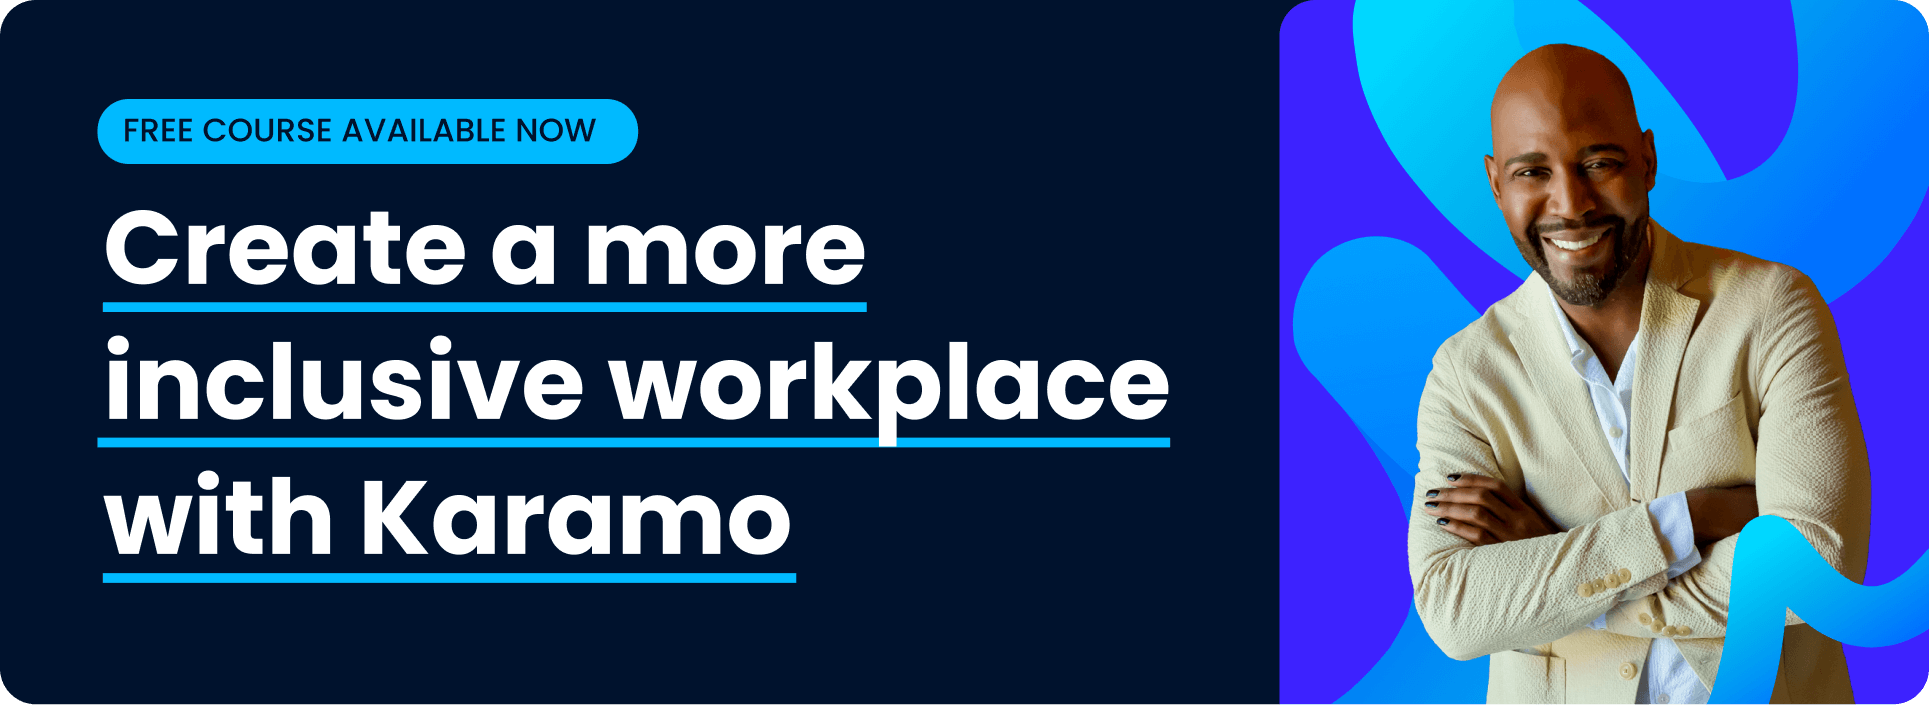 Create a more inclusive workplace with Karamo